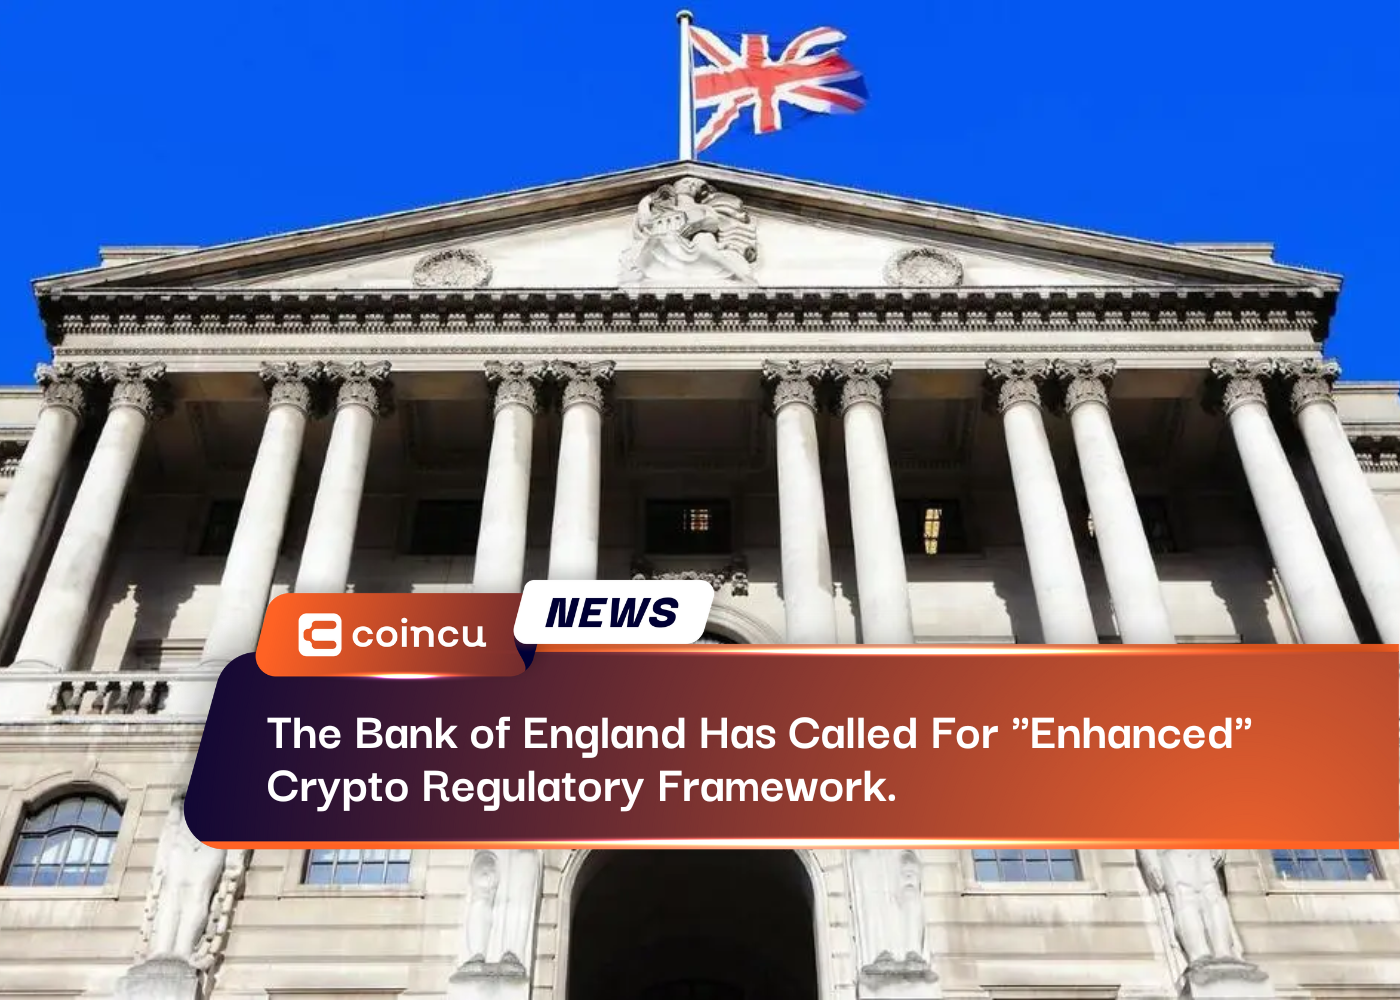 The Bank of England Has Called For "Enhanced" Crypto Regulatory Framework.